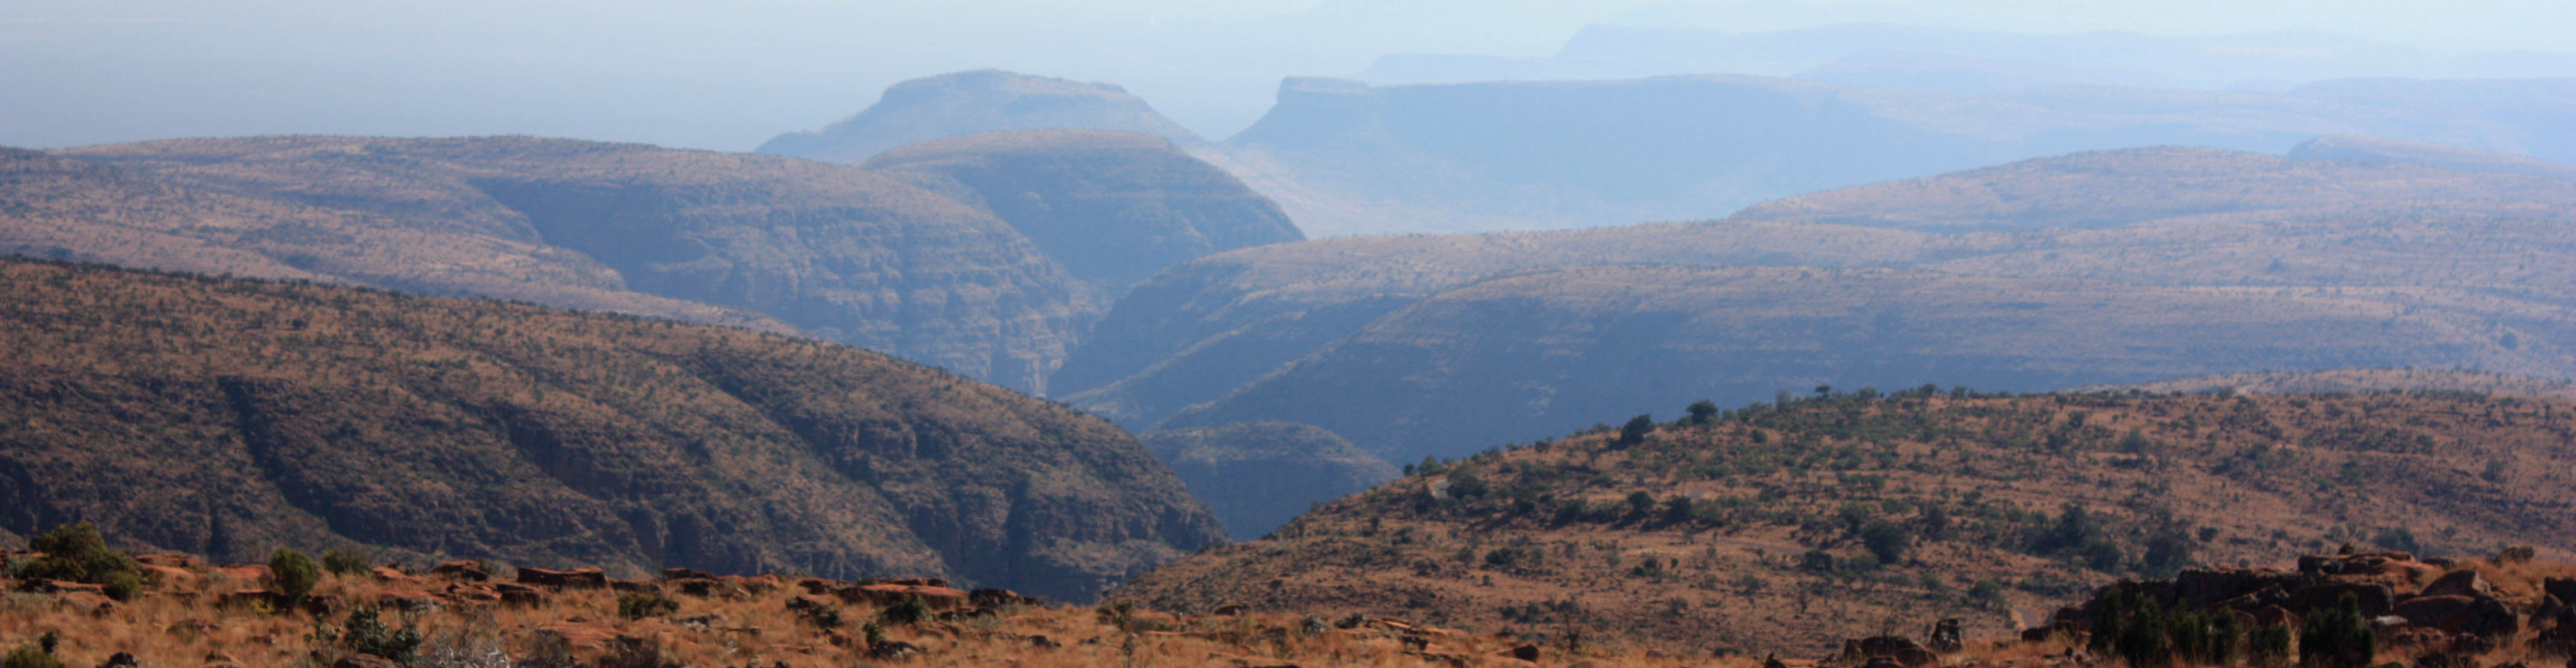 Marakele National Park, South Africa